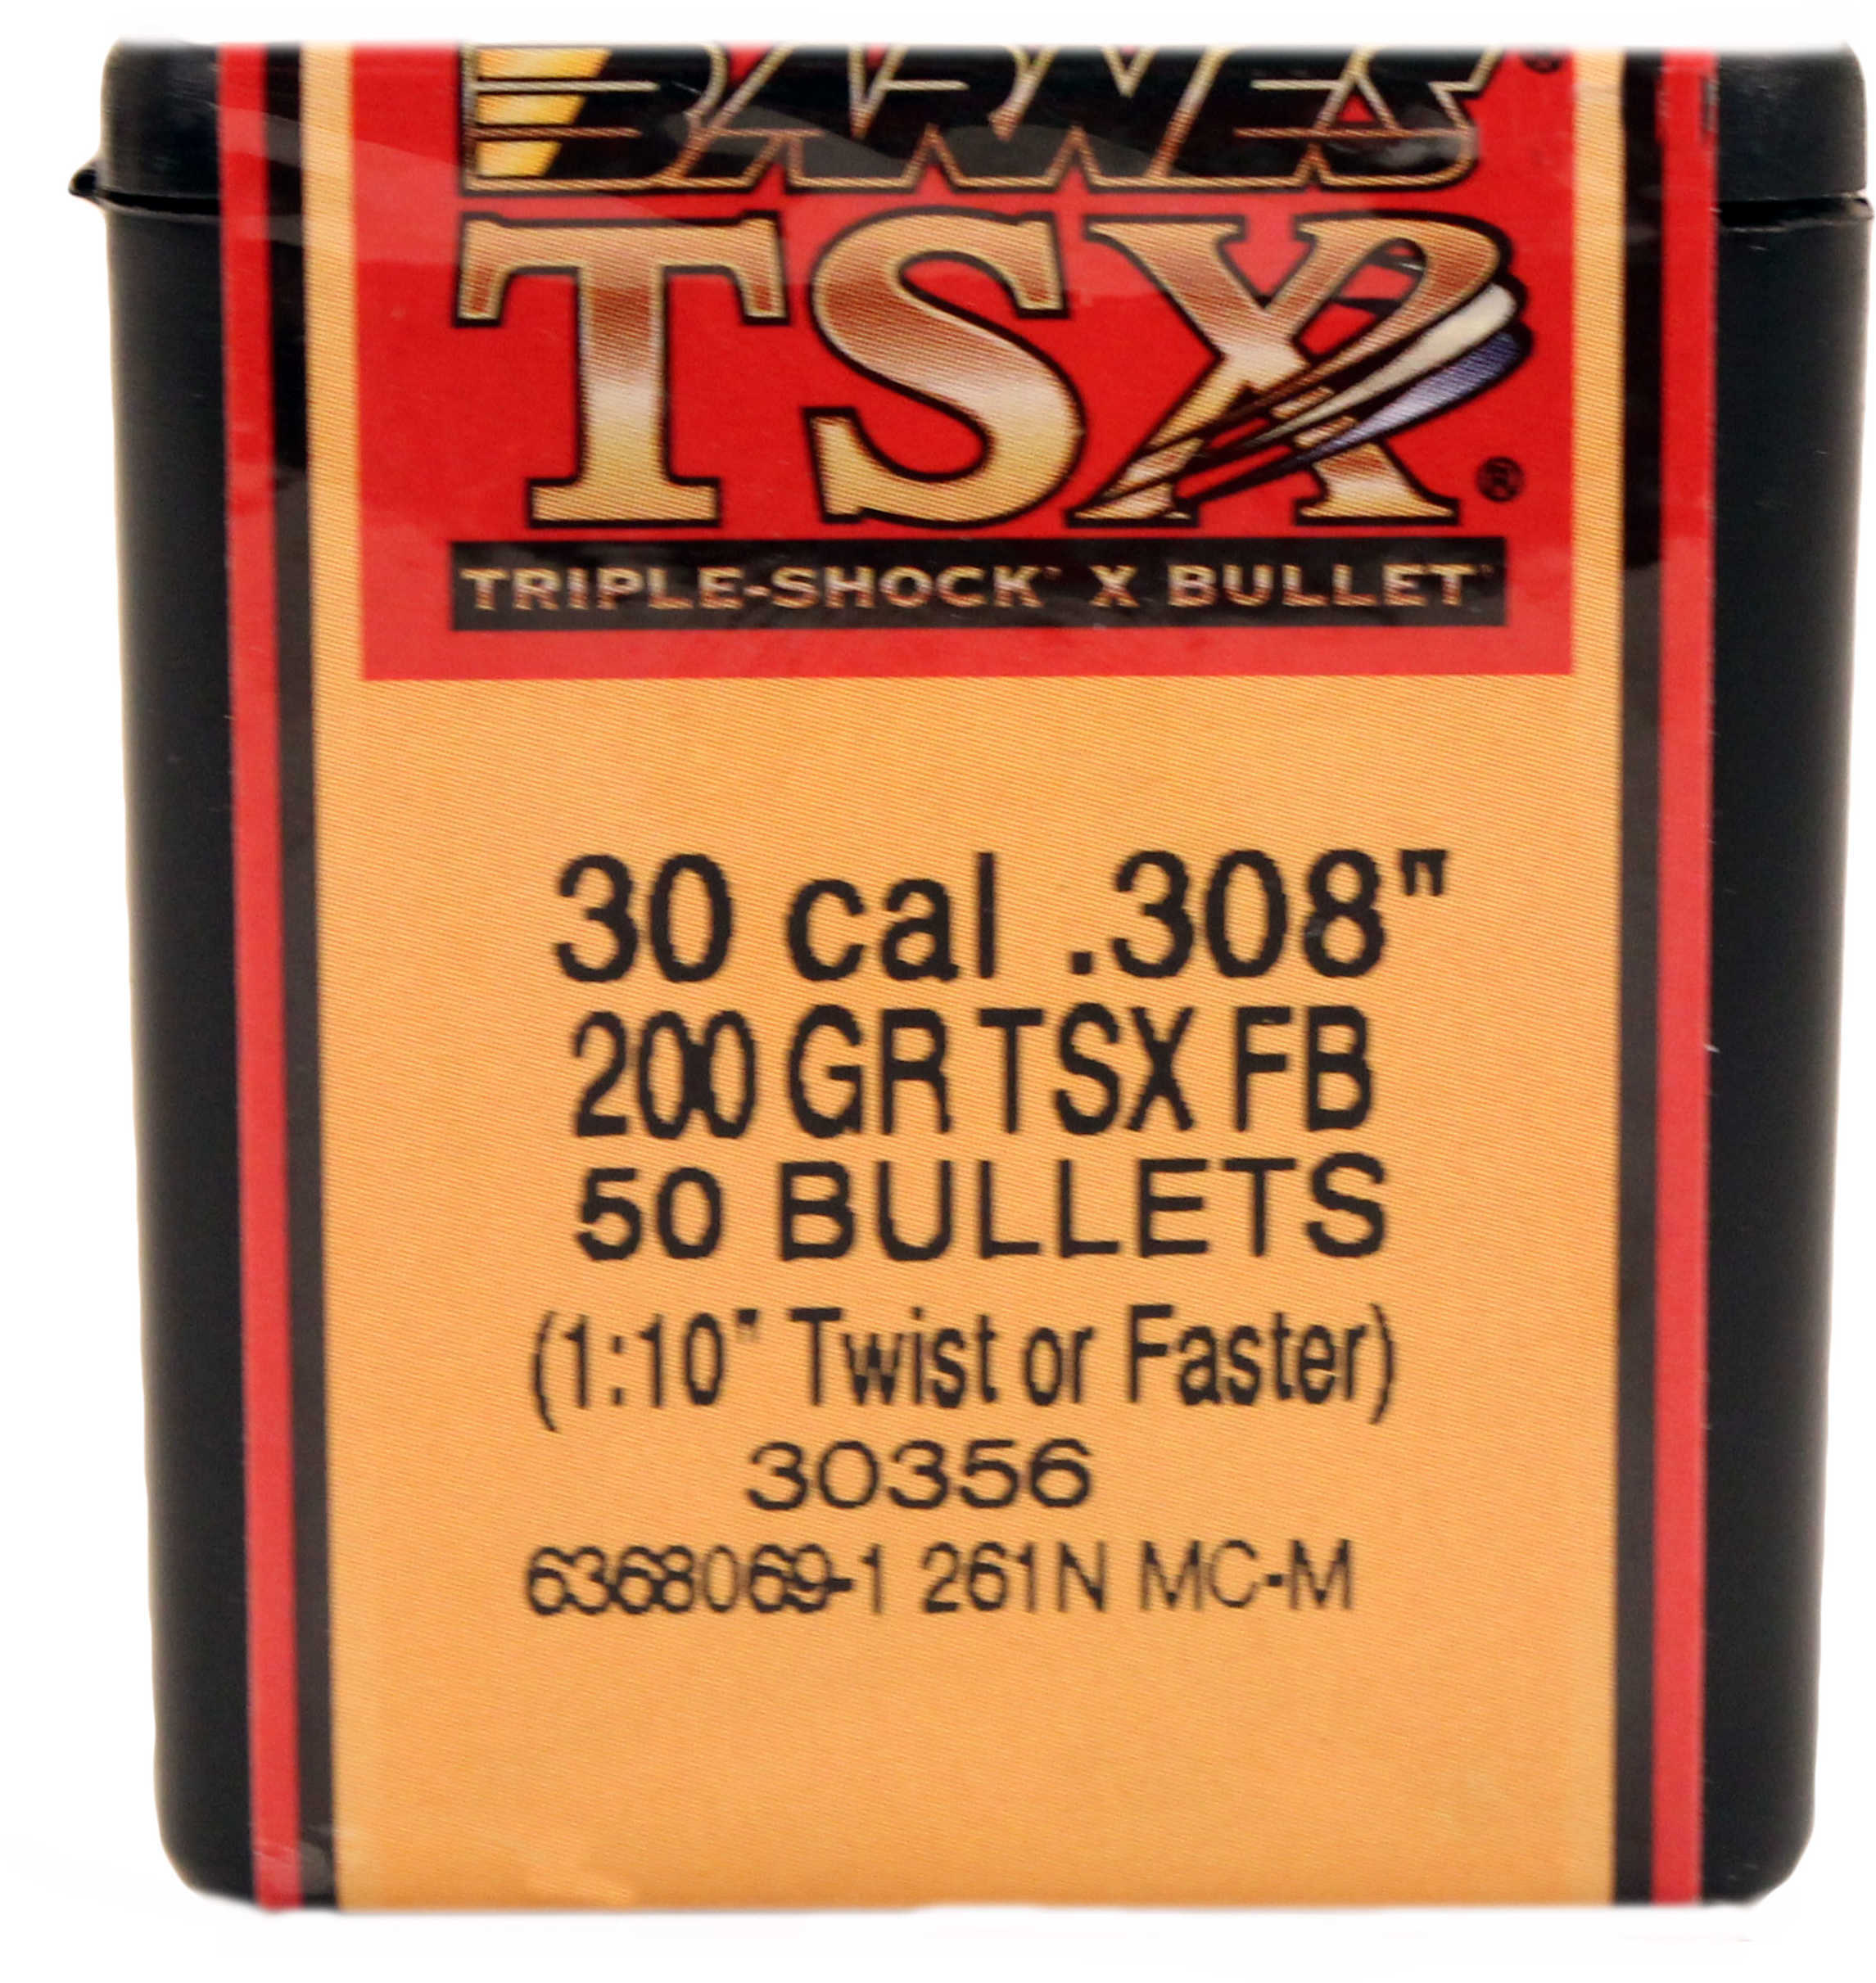 Barnes All Copper Triple-Shock X Bullet 30 Caliber 200 Grain Flat Base 50/Box Md: 30848